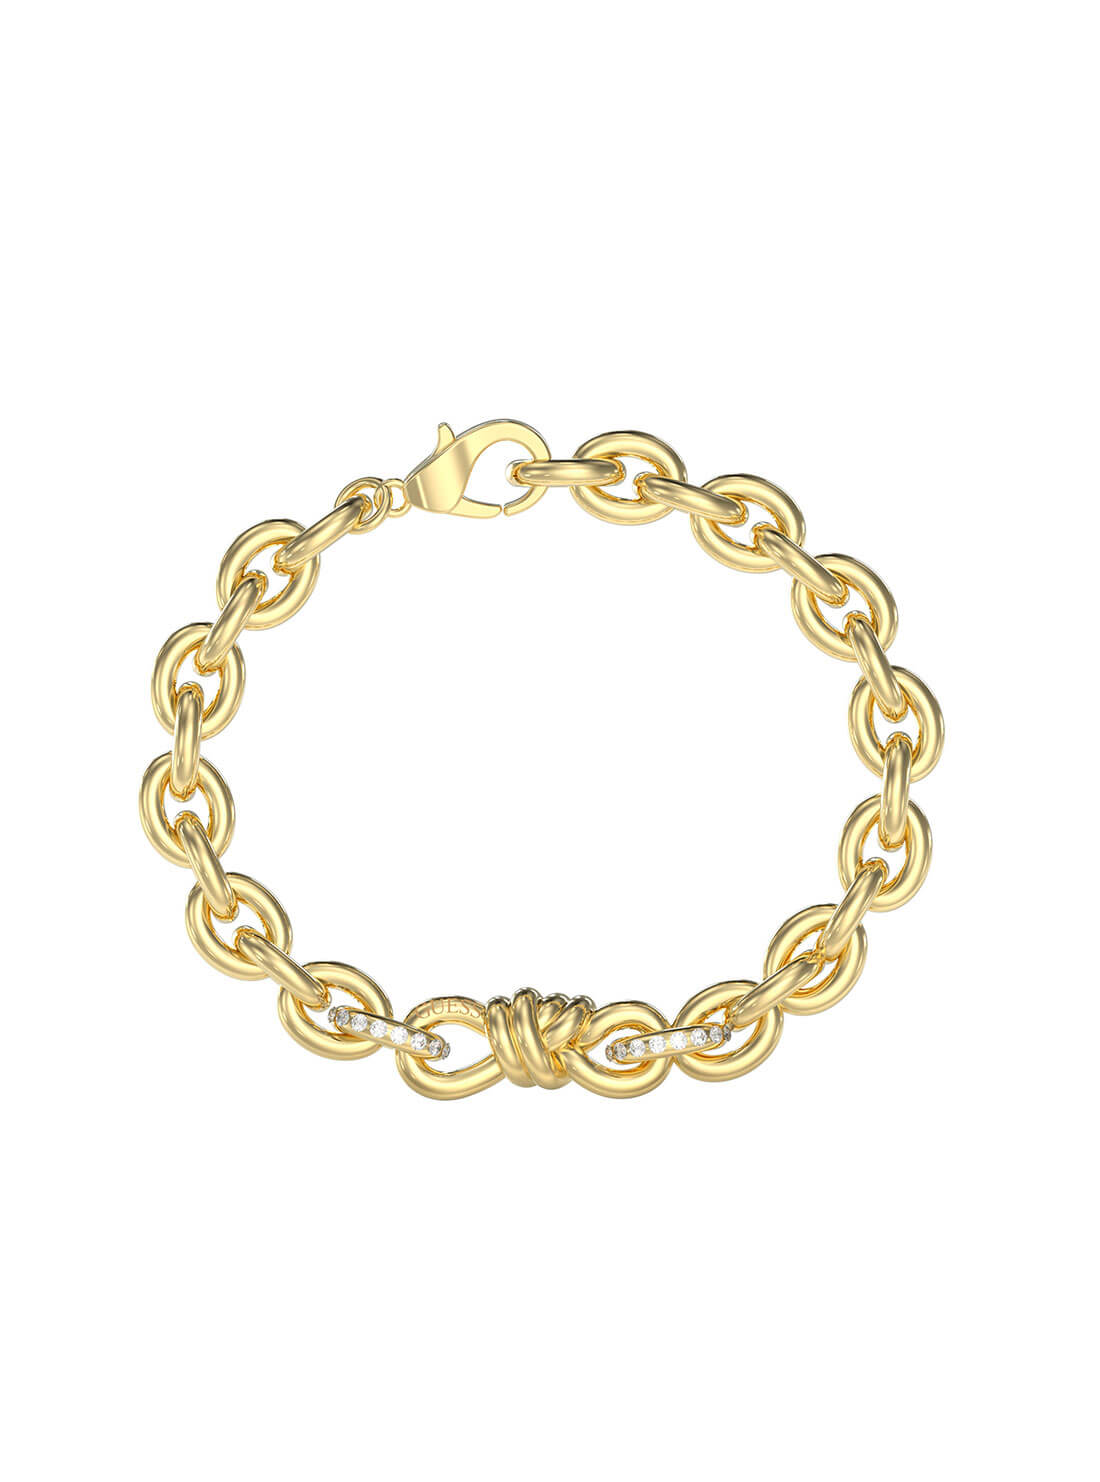 Gold Modern Love Knot Bracelet | GUESS Women's Jewellery | Front view